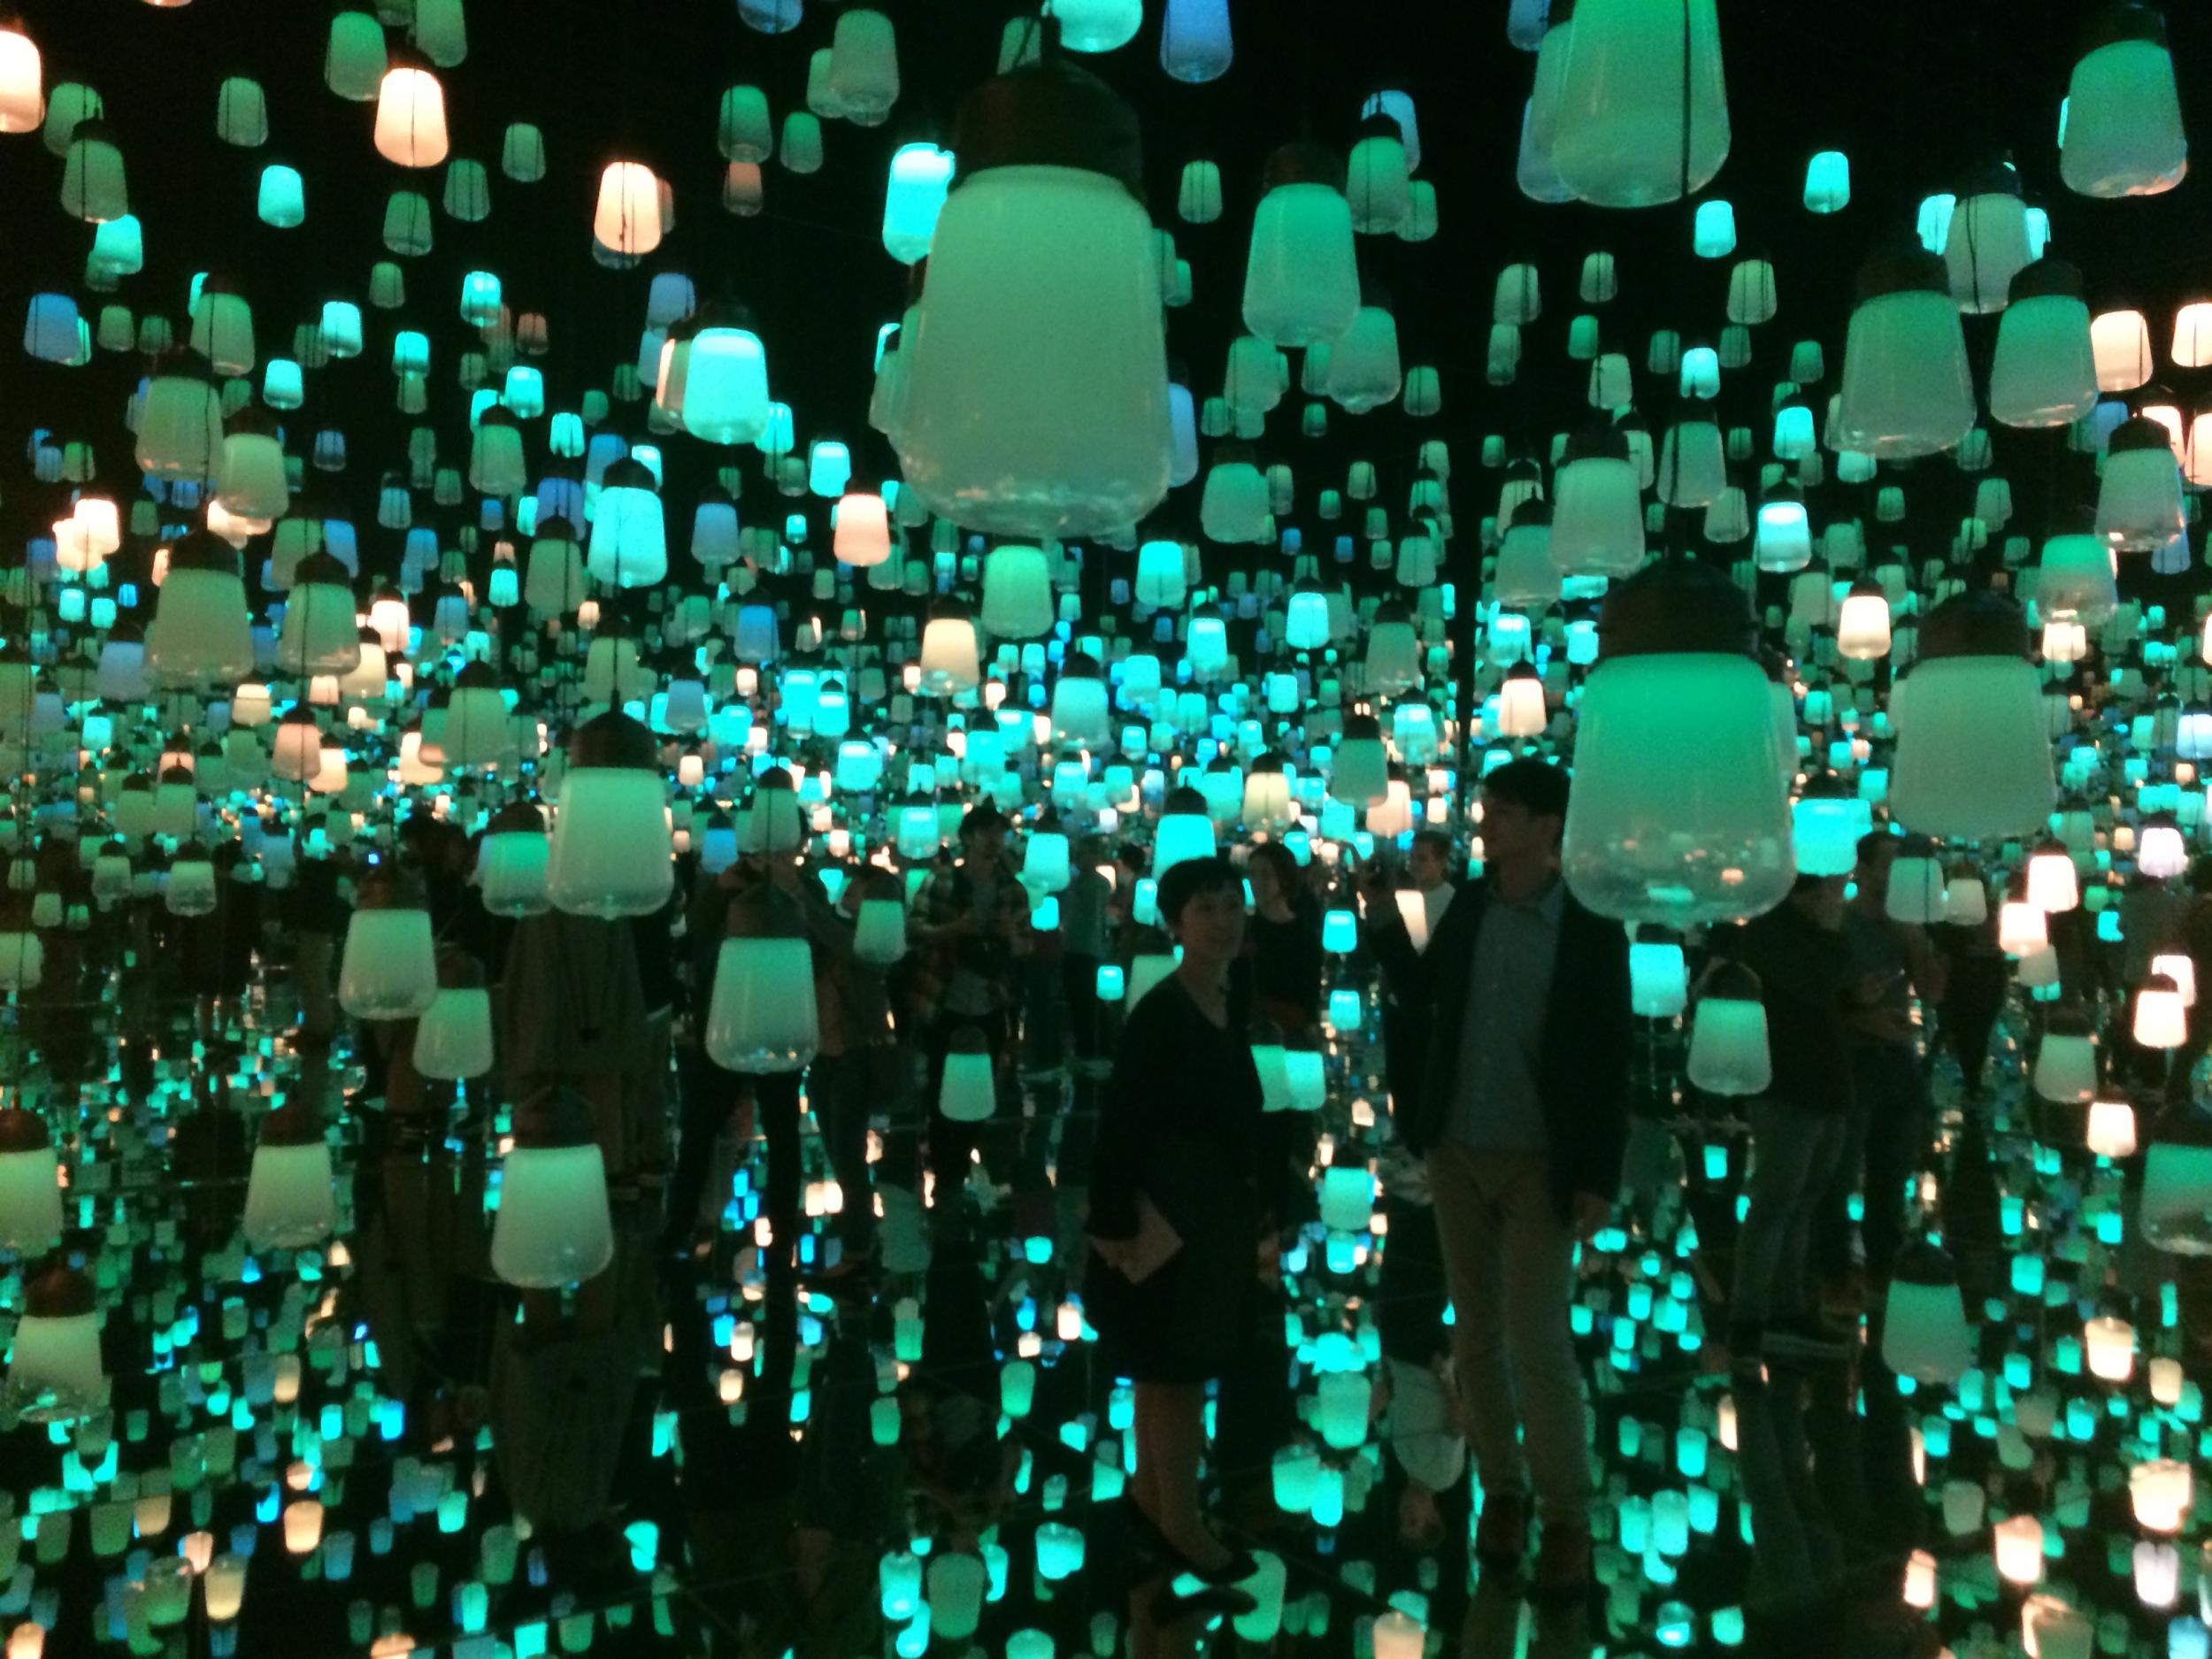 MORI Building Digital Art Museum uses projectors to transform the space